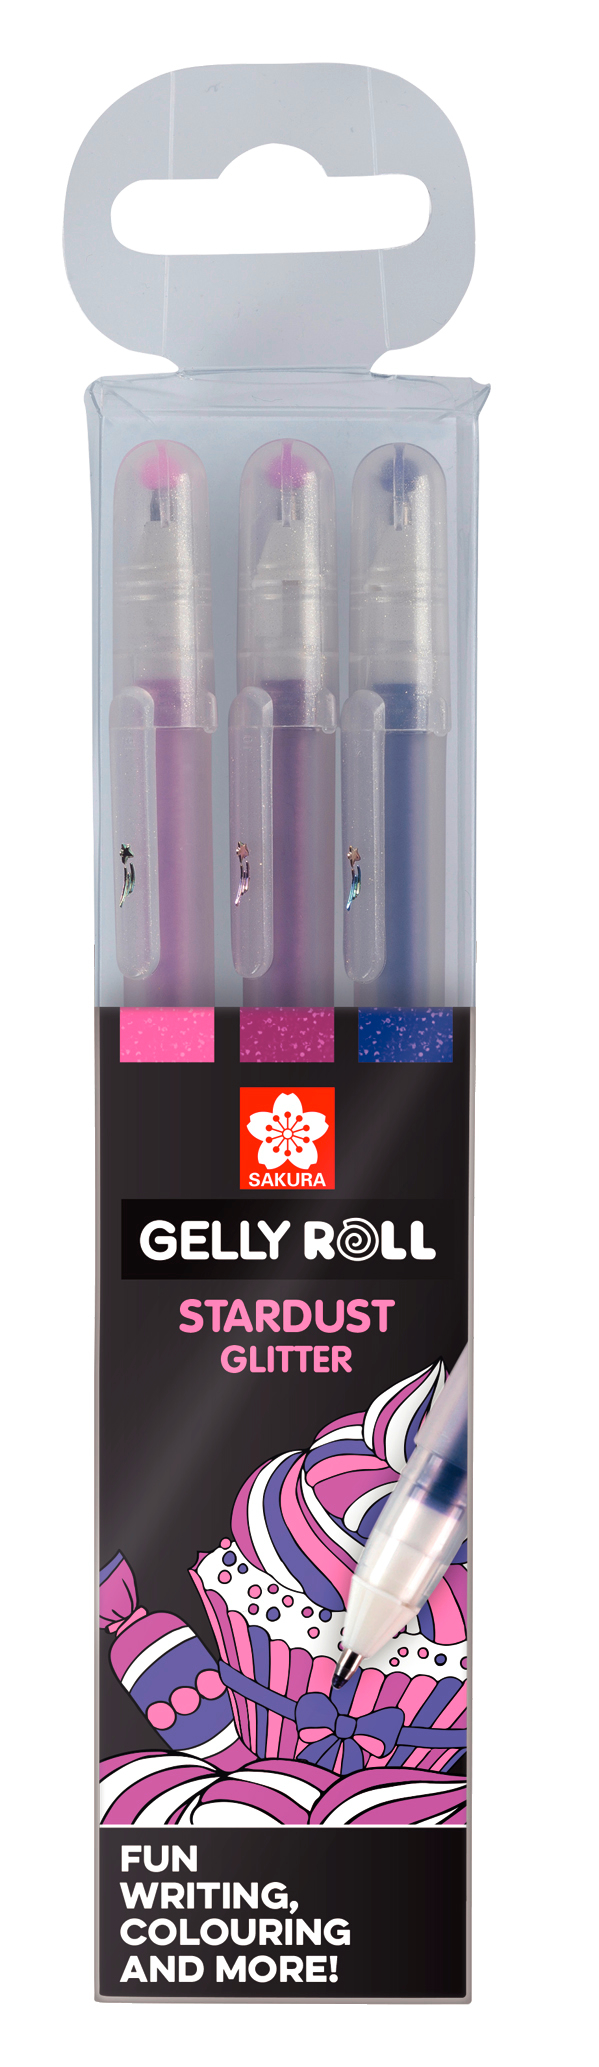 SAKURA Gelly Roll 0.5mm POXPGBSTA3A Startdust Glitter Sweets 3 p.